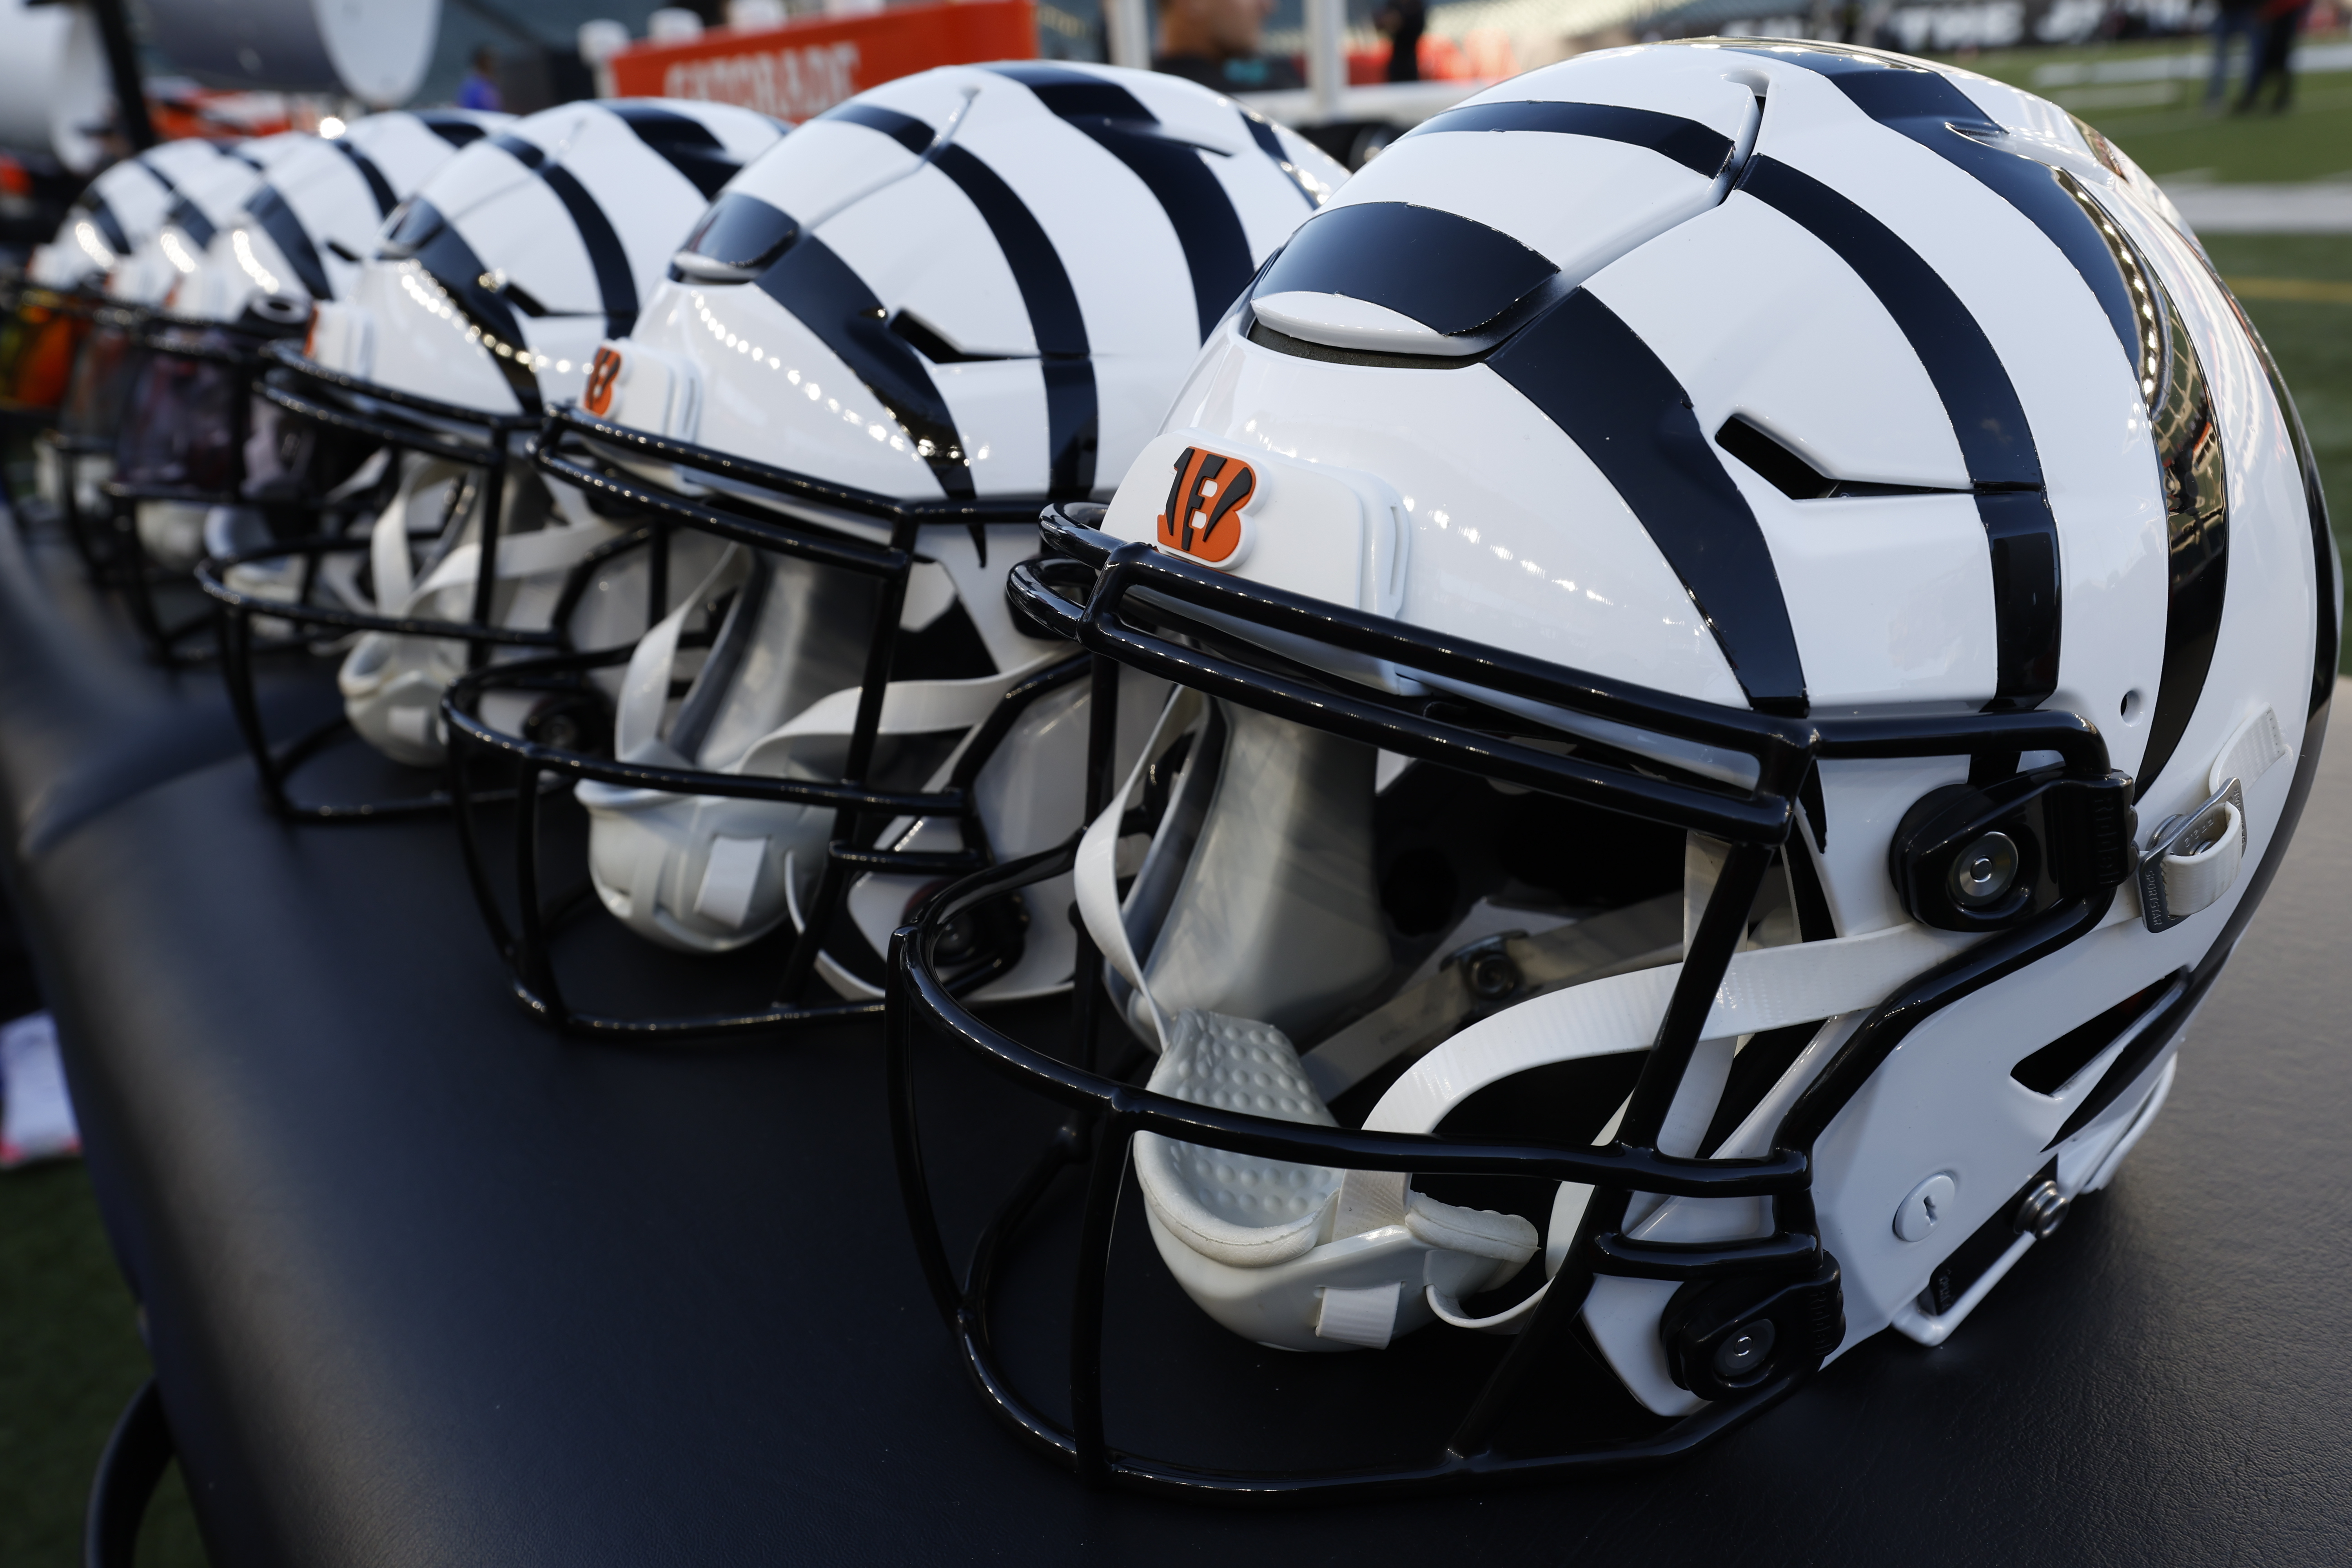 bengals new helmets and uniforms